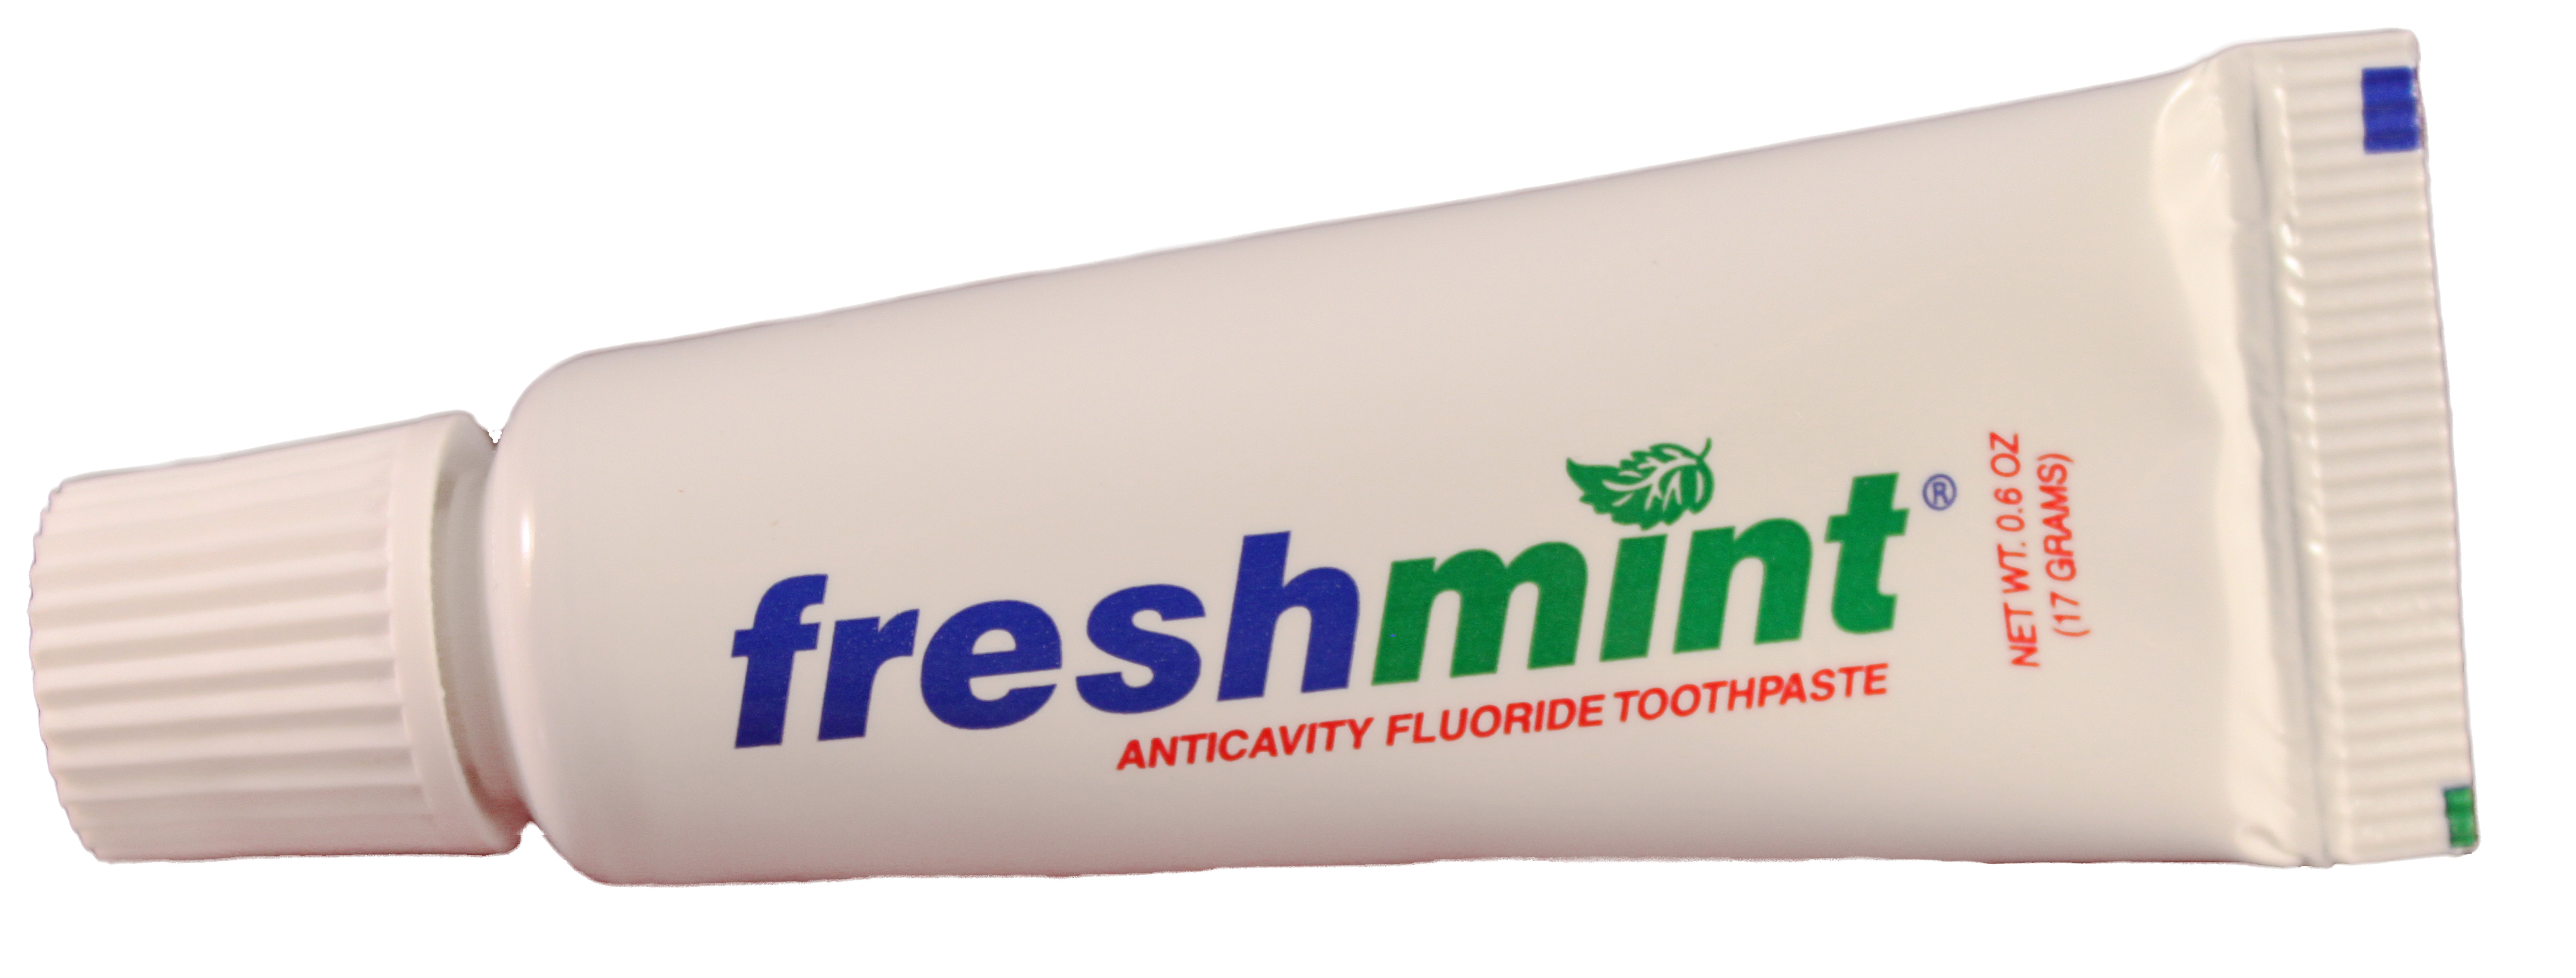 Freshmint 0.6 oz. Anticavity Fluoride TOOTHPASTE